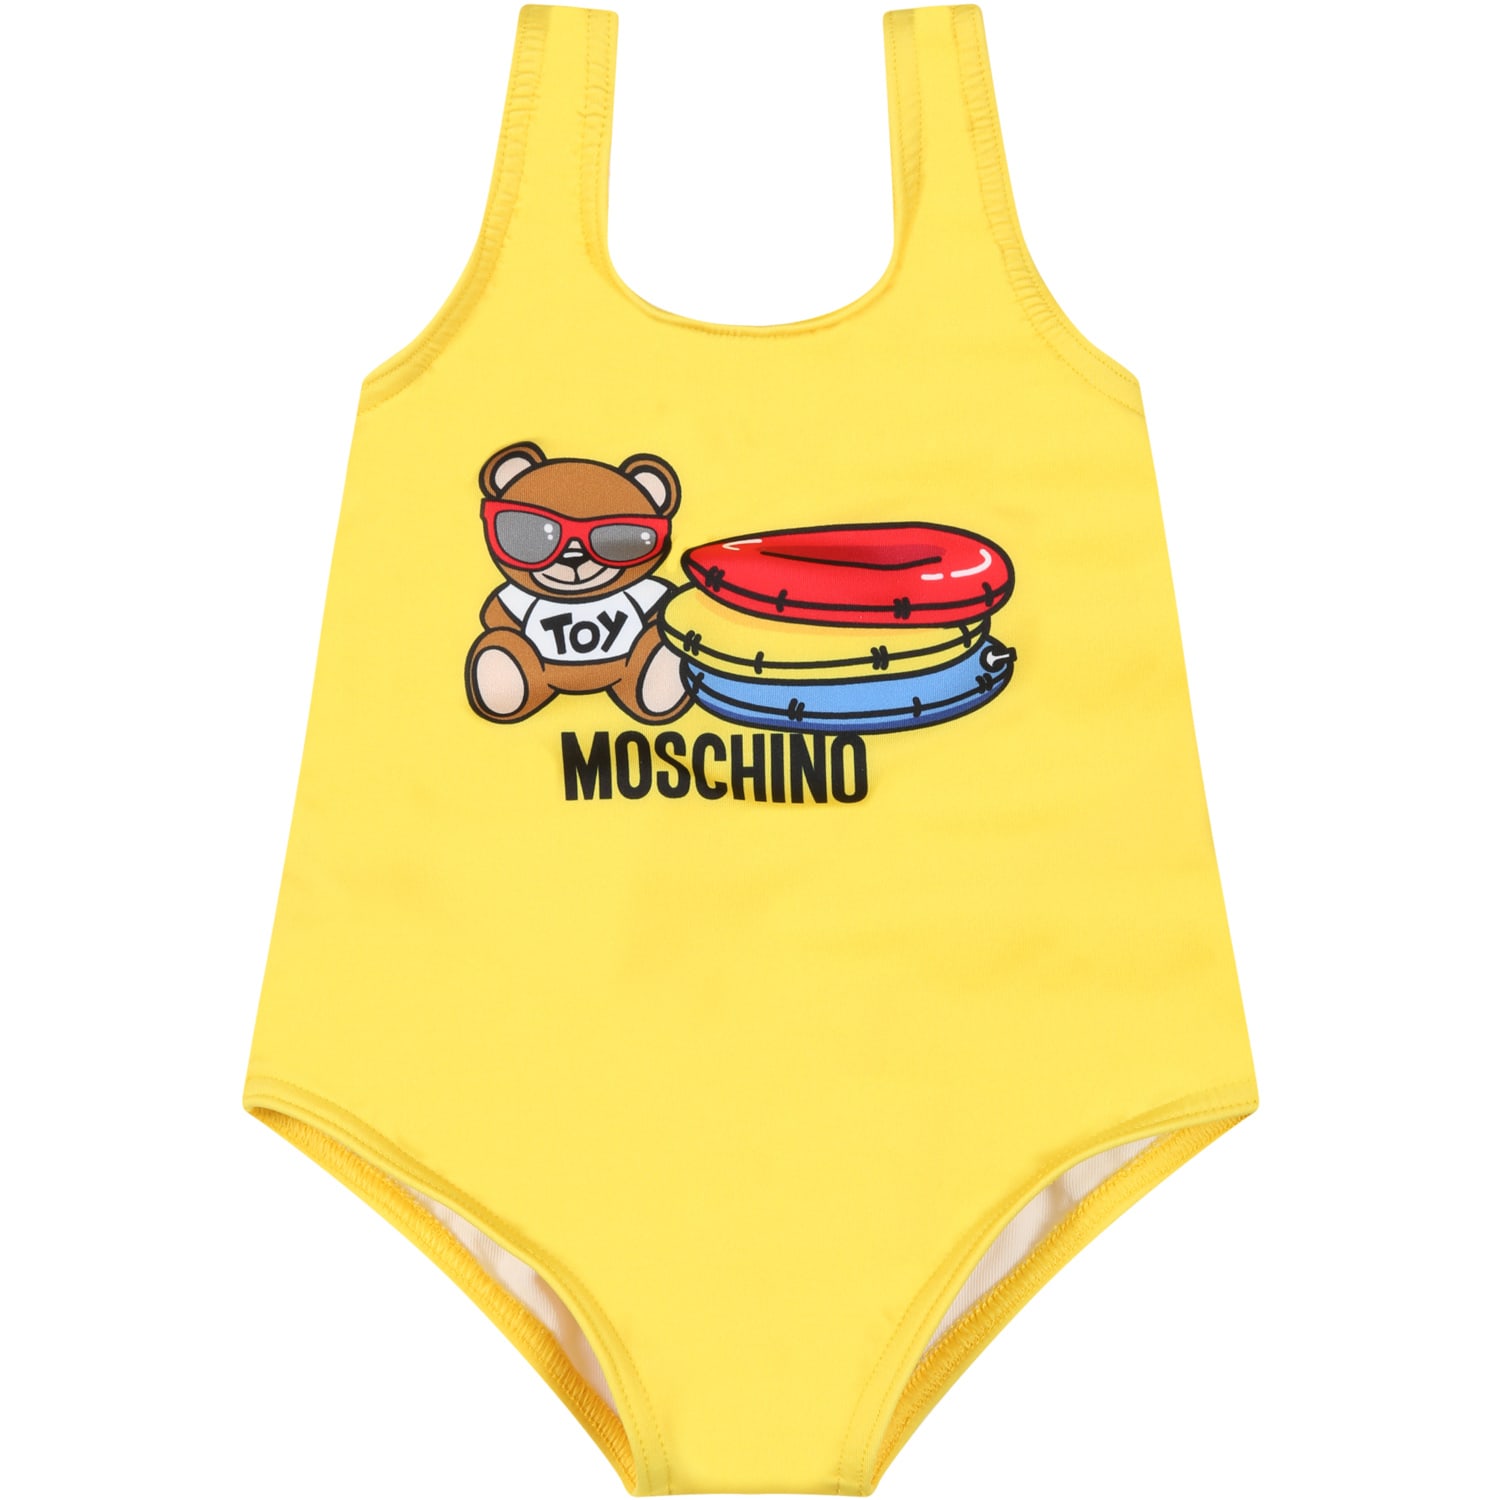 Moschino Yellow Swimsuit For Baby Girl